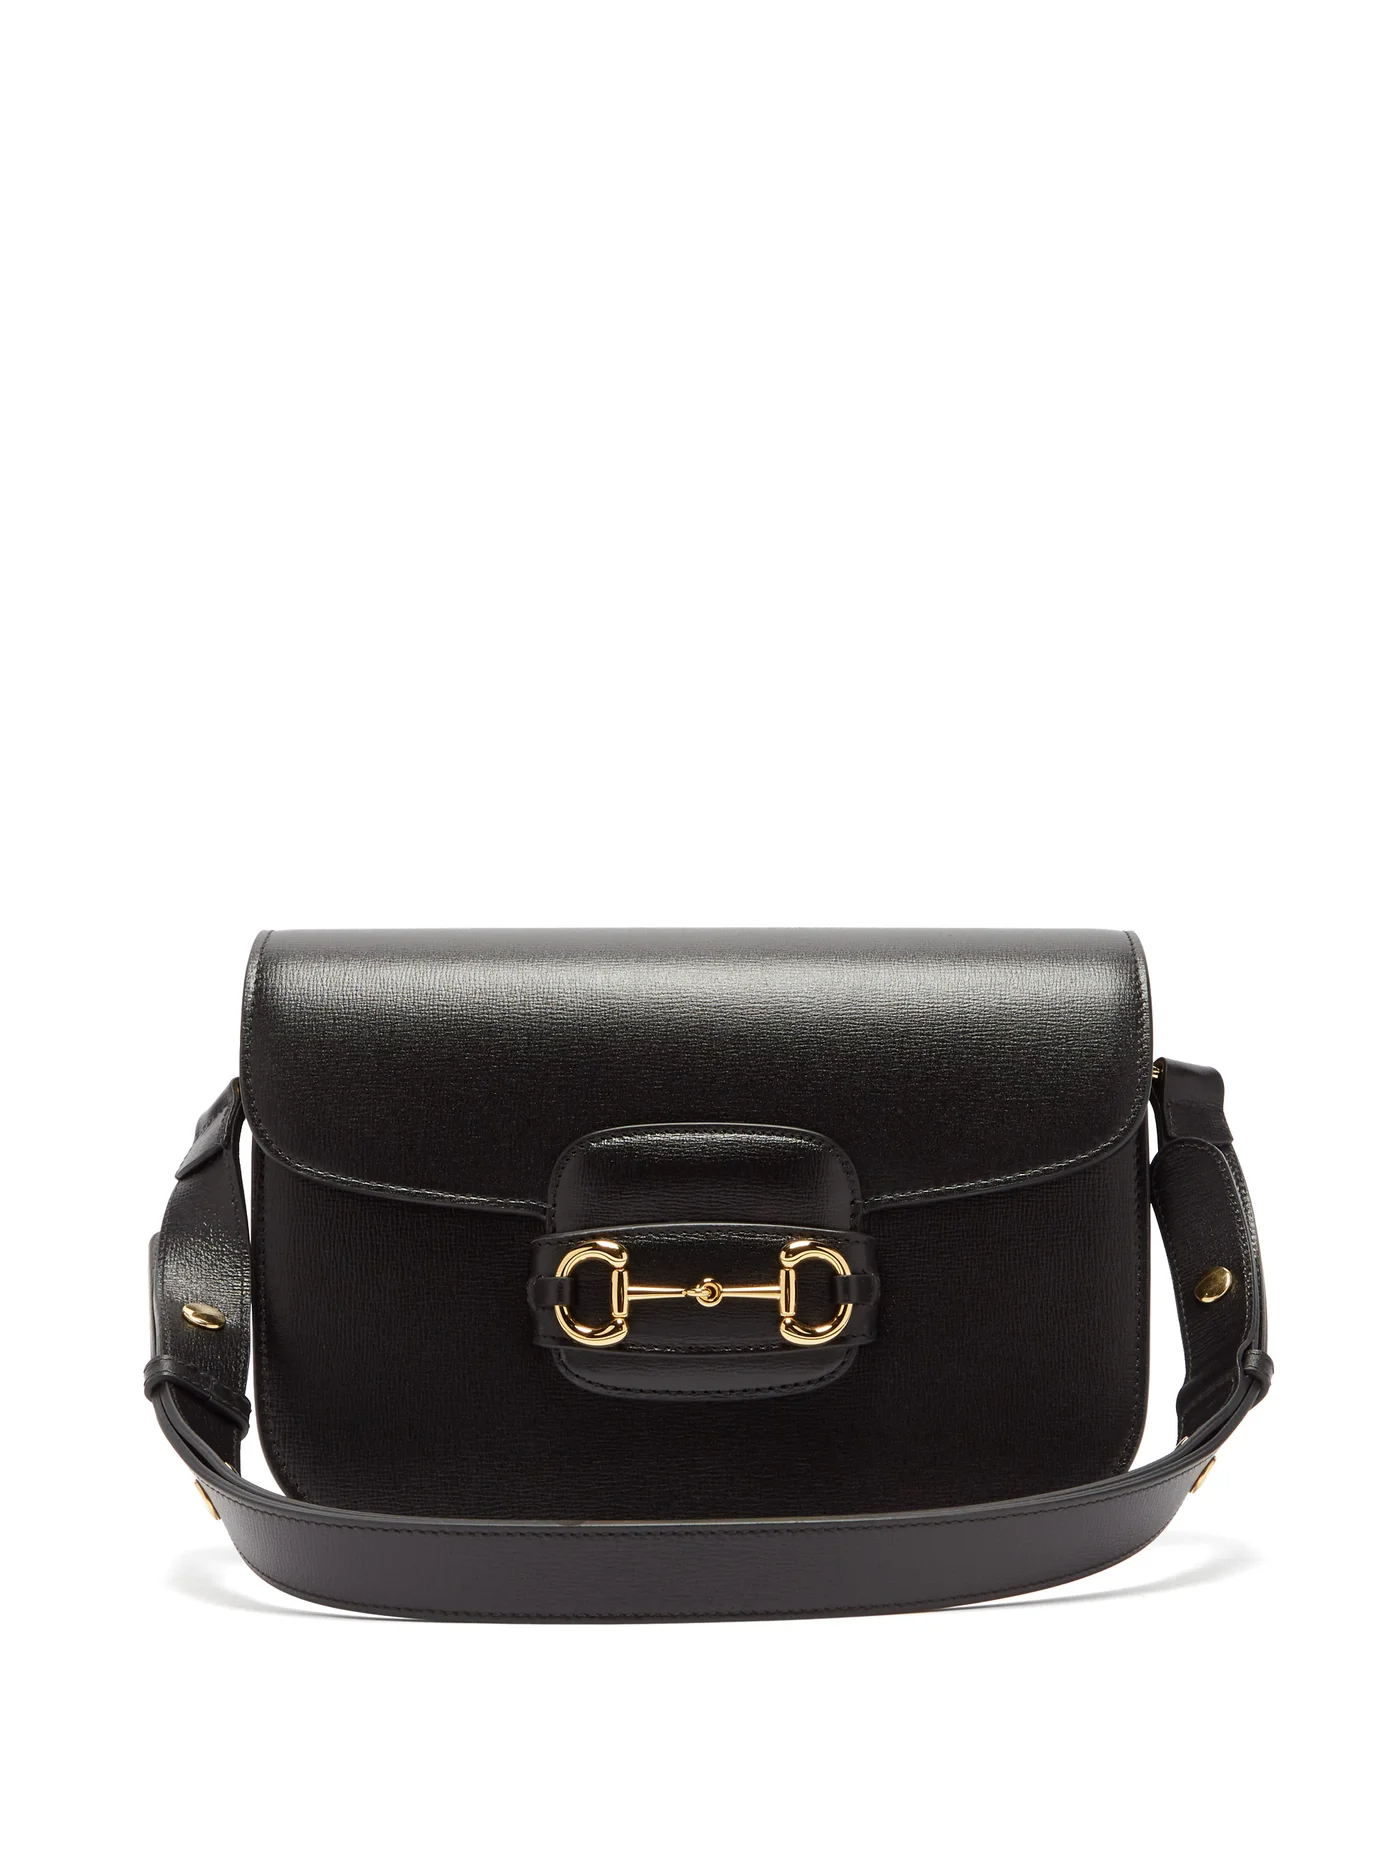 Gucci + 1955 Horsebit Grained-leather Shoulder Bag